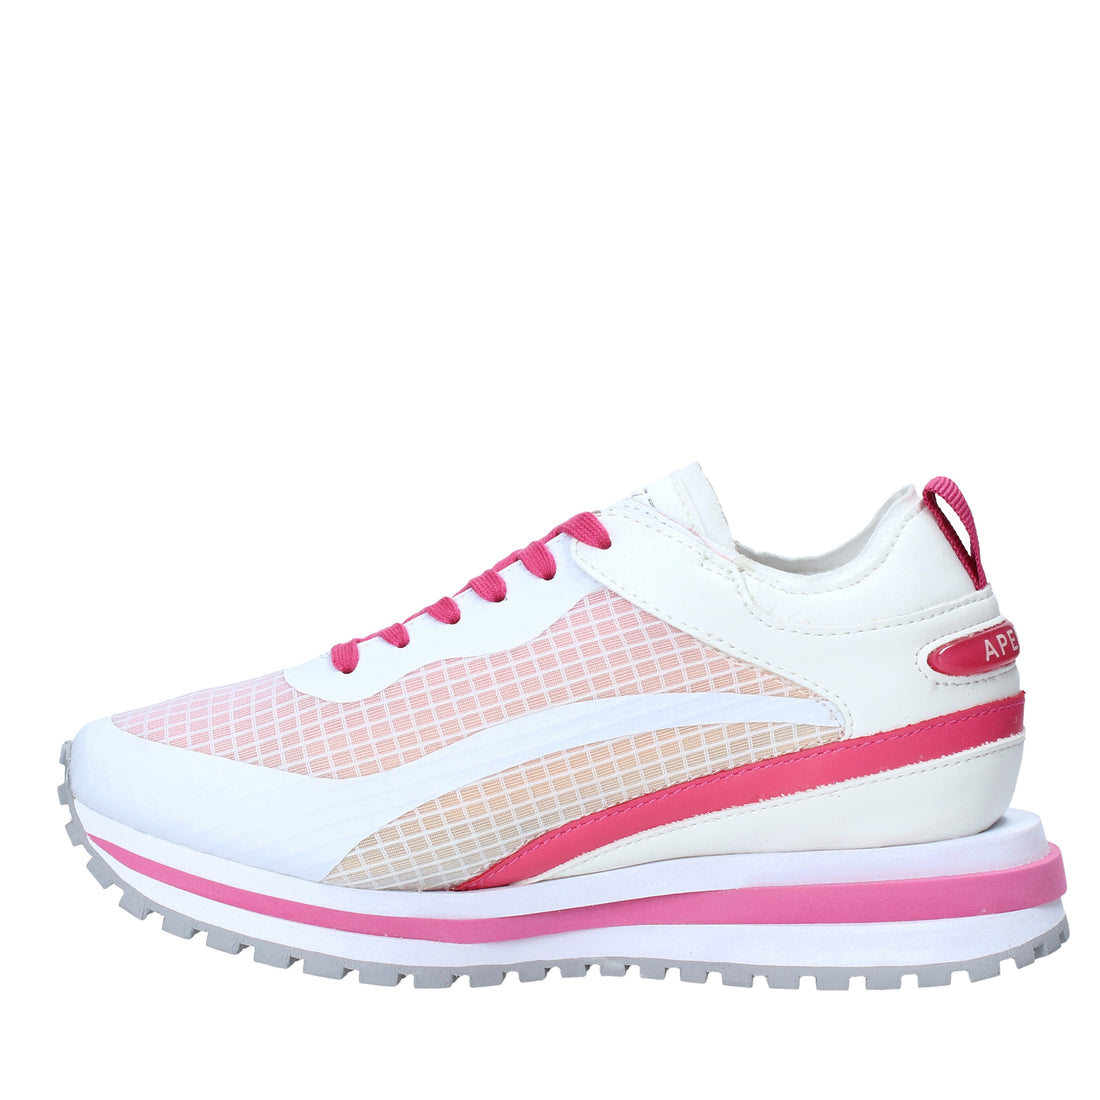 Sneakers Bianco Rosa Apepazza